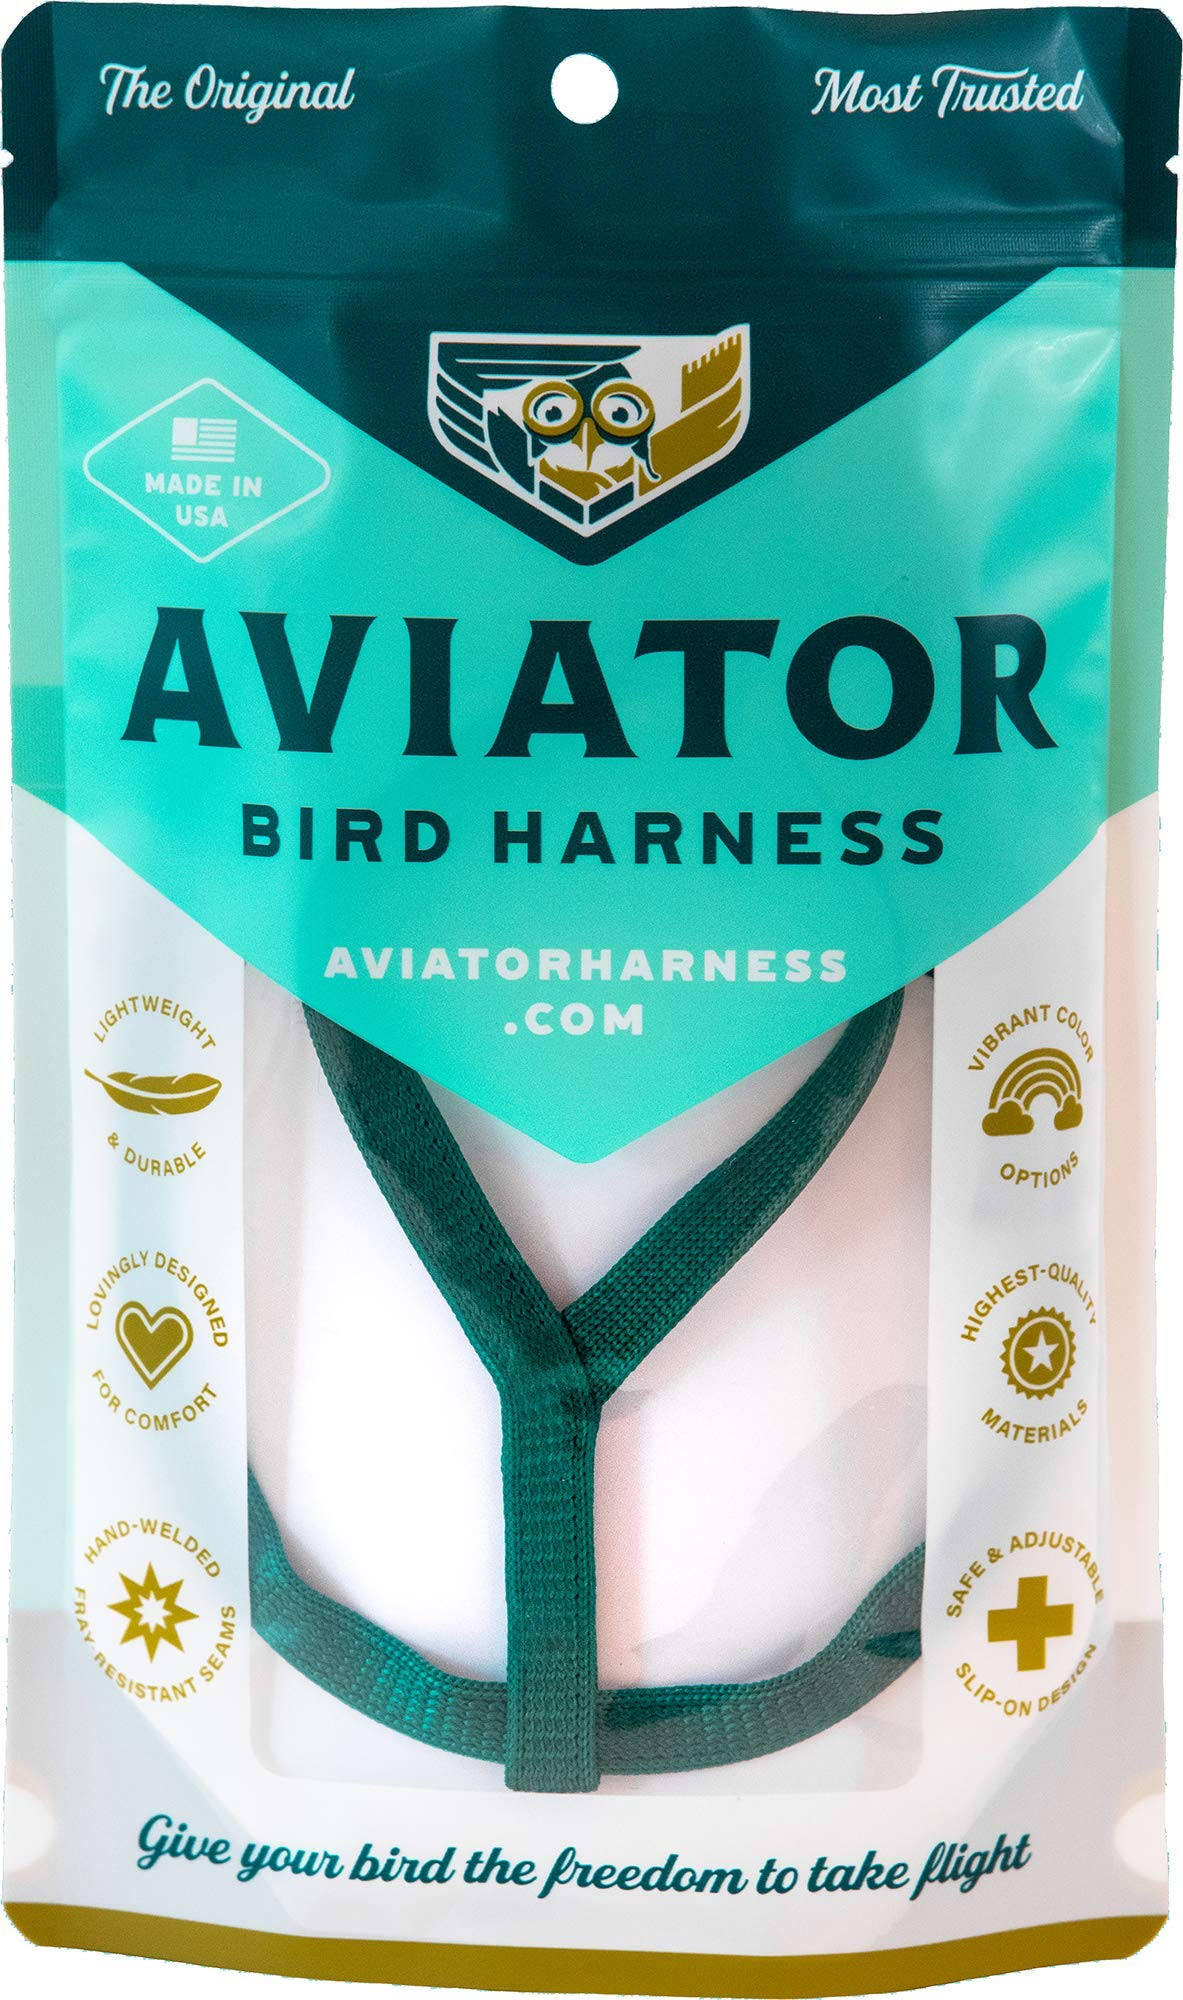 The Aviator Pet Bird Harness and Leash - Petite Green